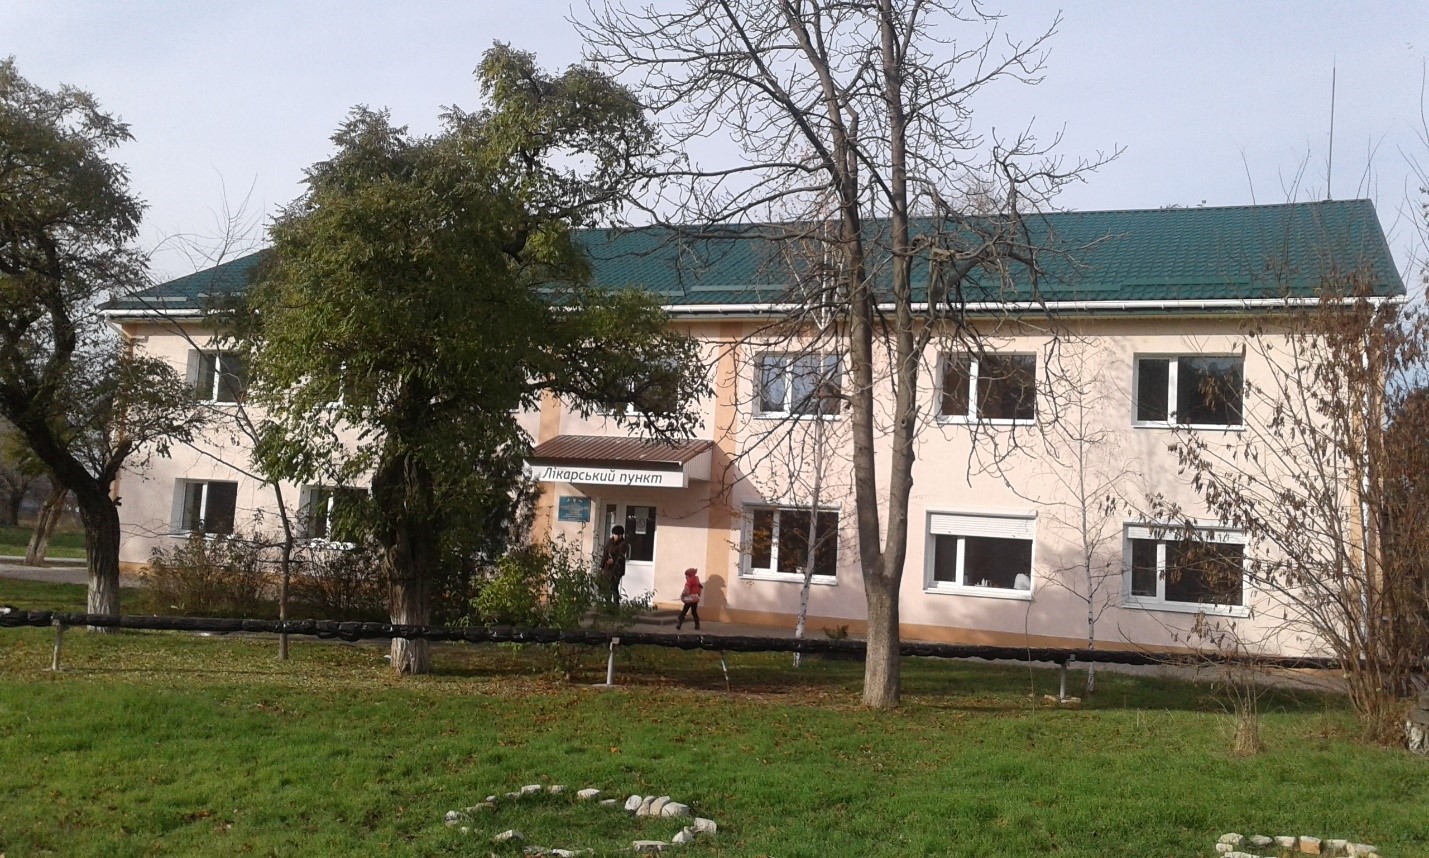 SOCIAL HOUSING FOR IDP MELITOPOL CITY